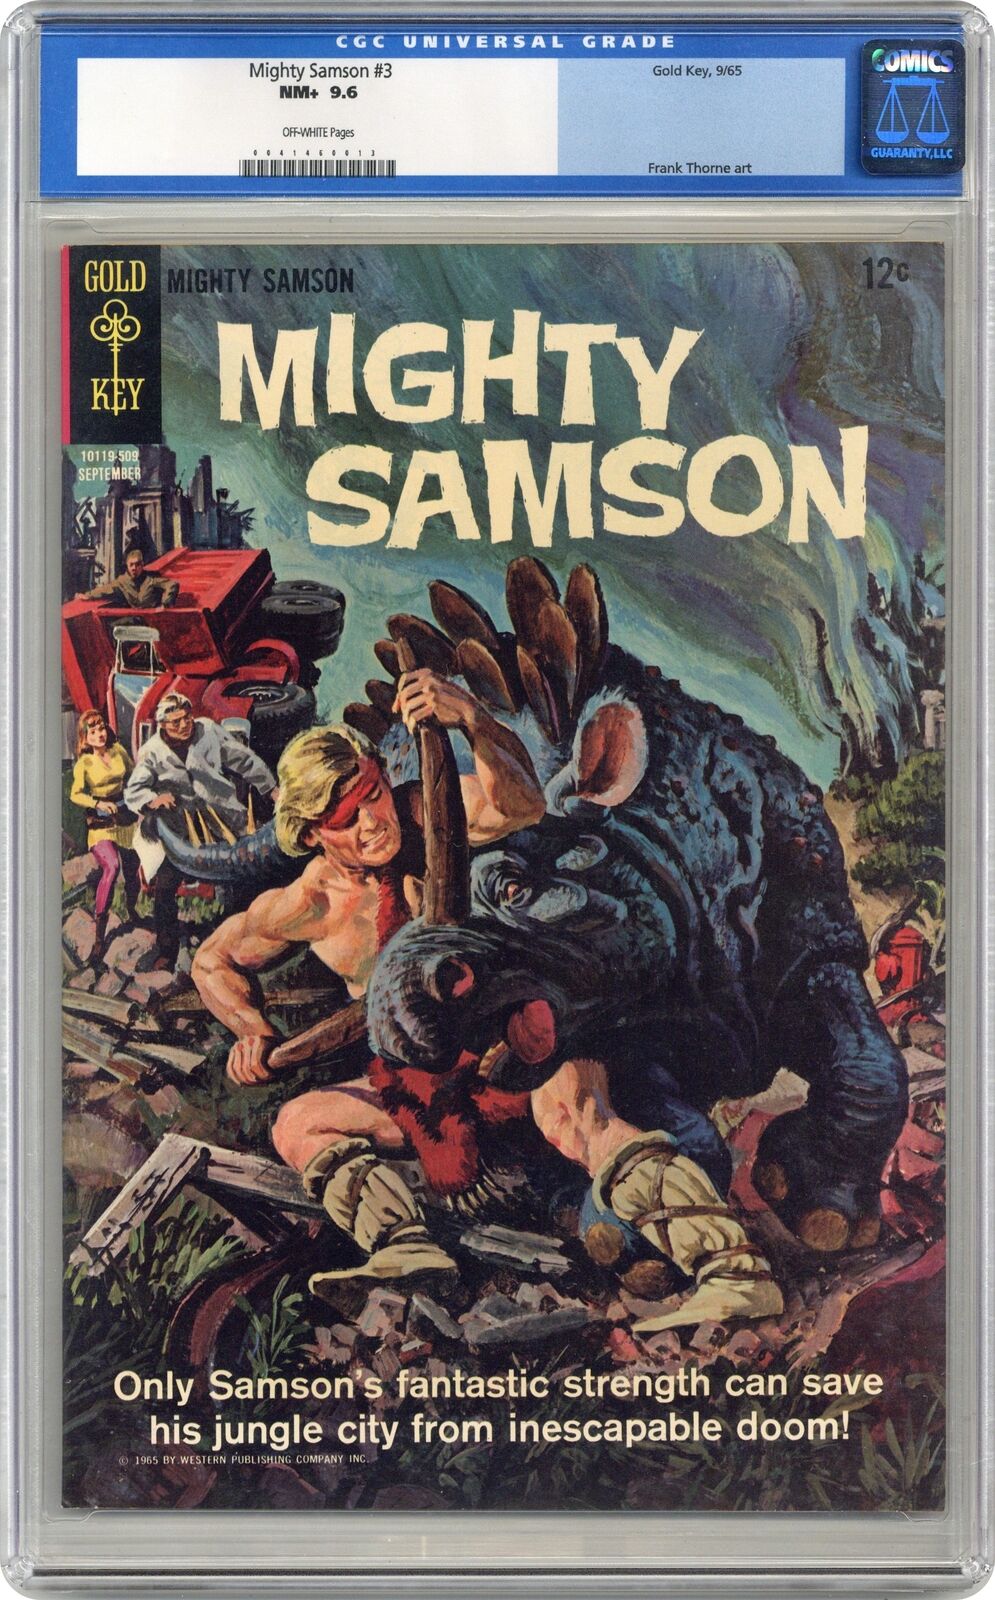 Mighty Samson #3 CGC 9.6 1965 0041460013